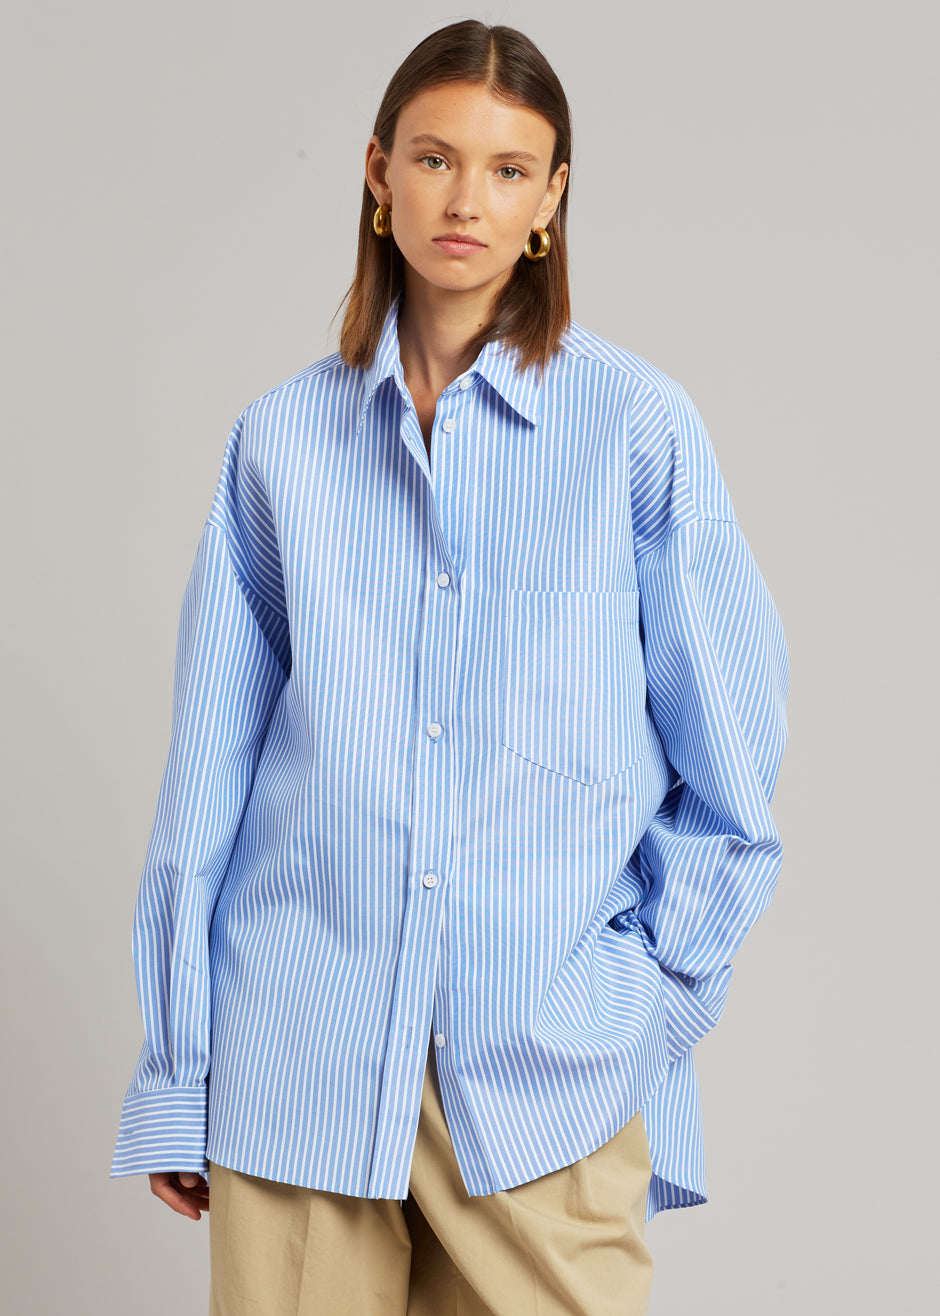 Georgia Stripe Shirt - White/Light Blue - 3